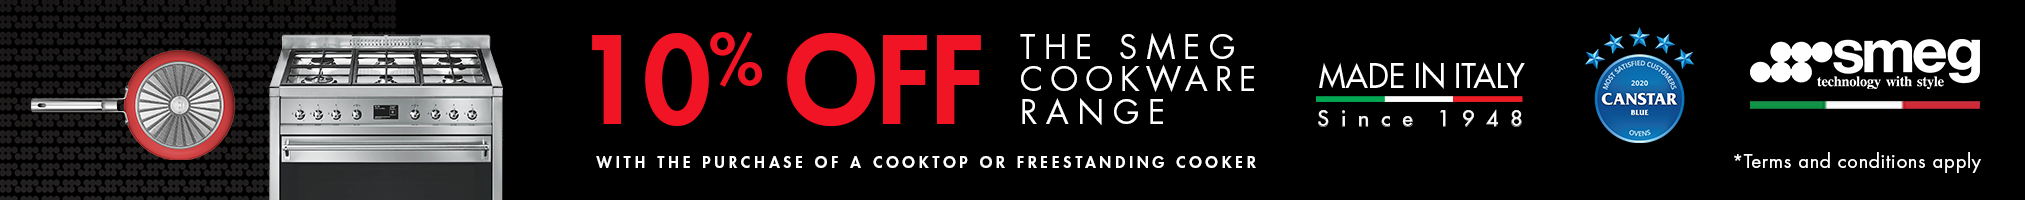 Purchase Smeg Cooktop or Freestanding Cooker & Receive 10%* Off Smeg Cookware Range